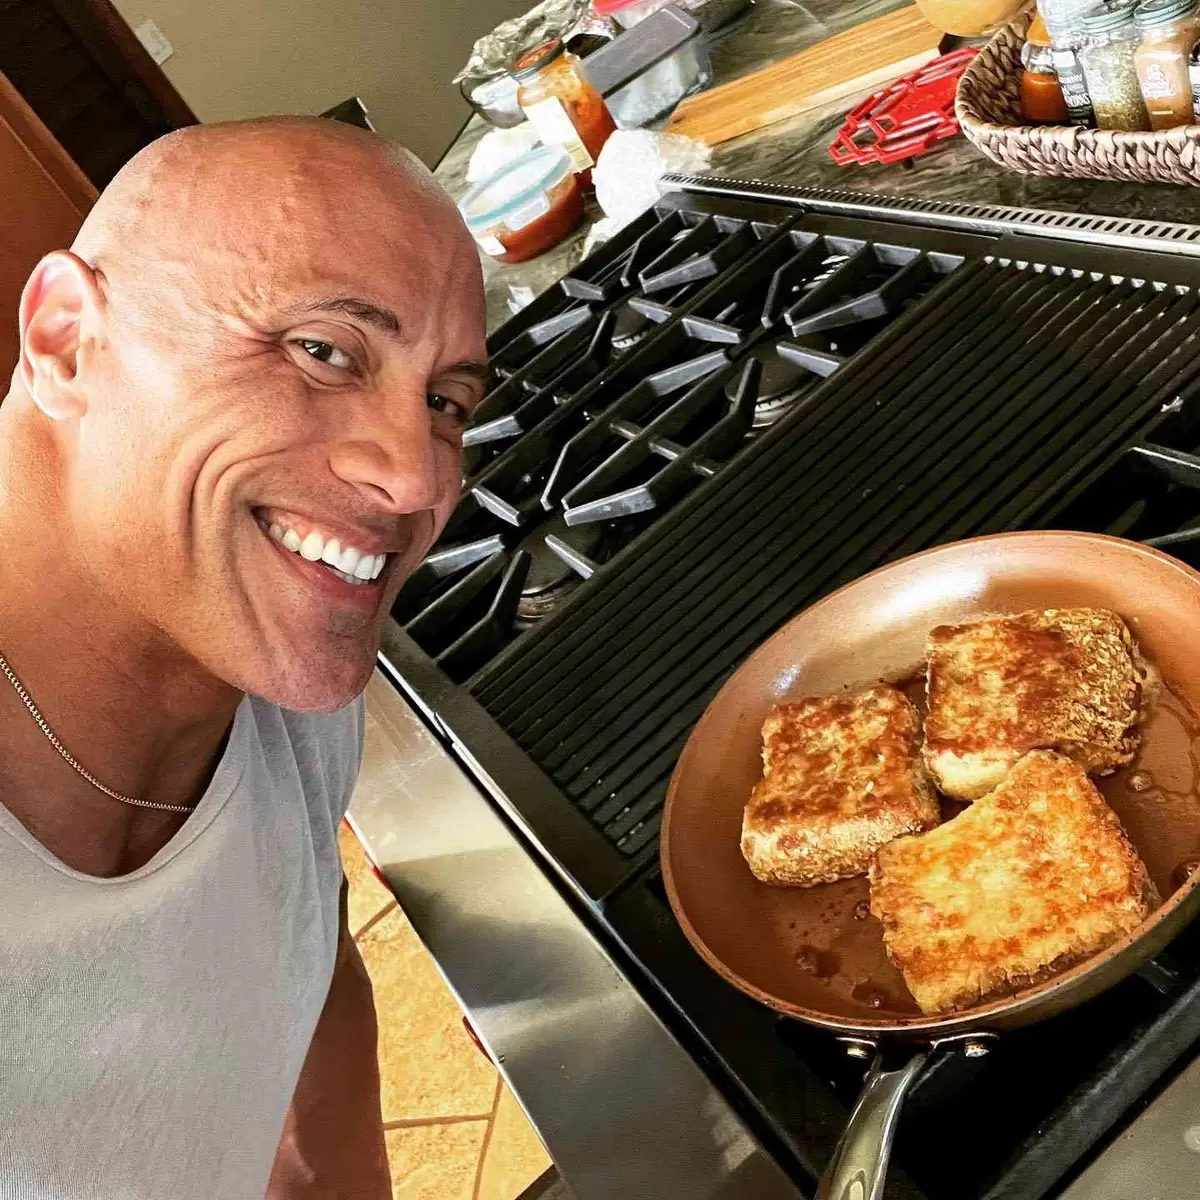 Dwayne Johnson's daily meals